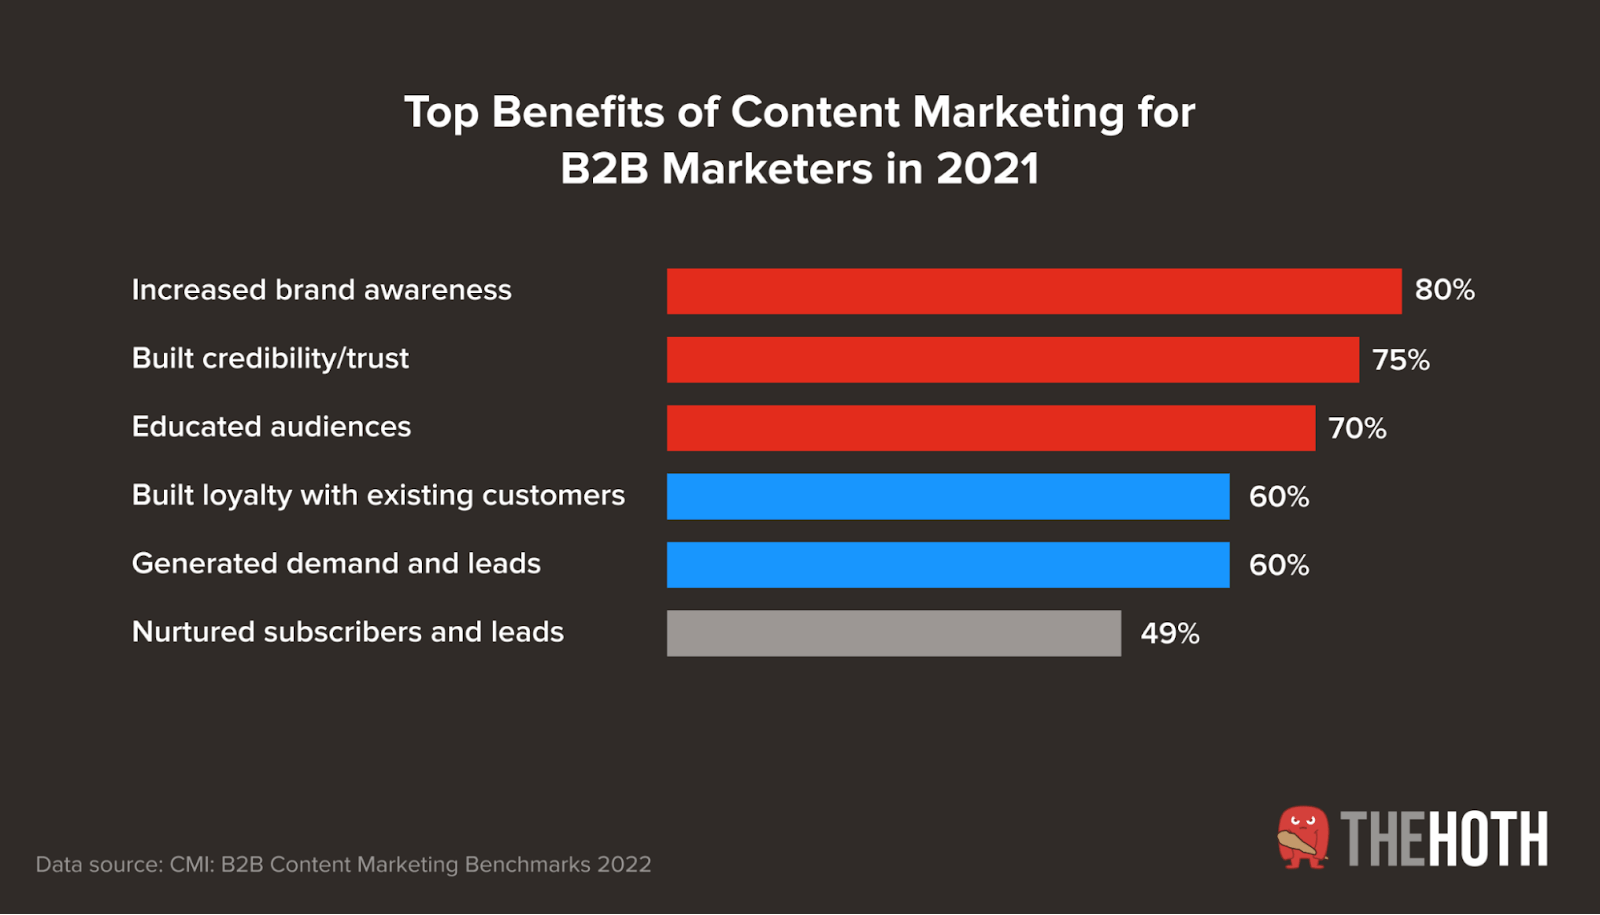 Top benefits of content marketing